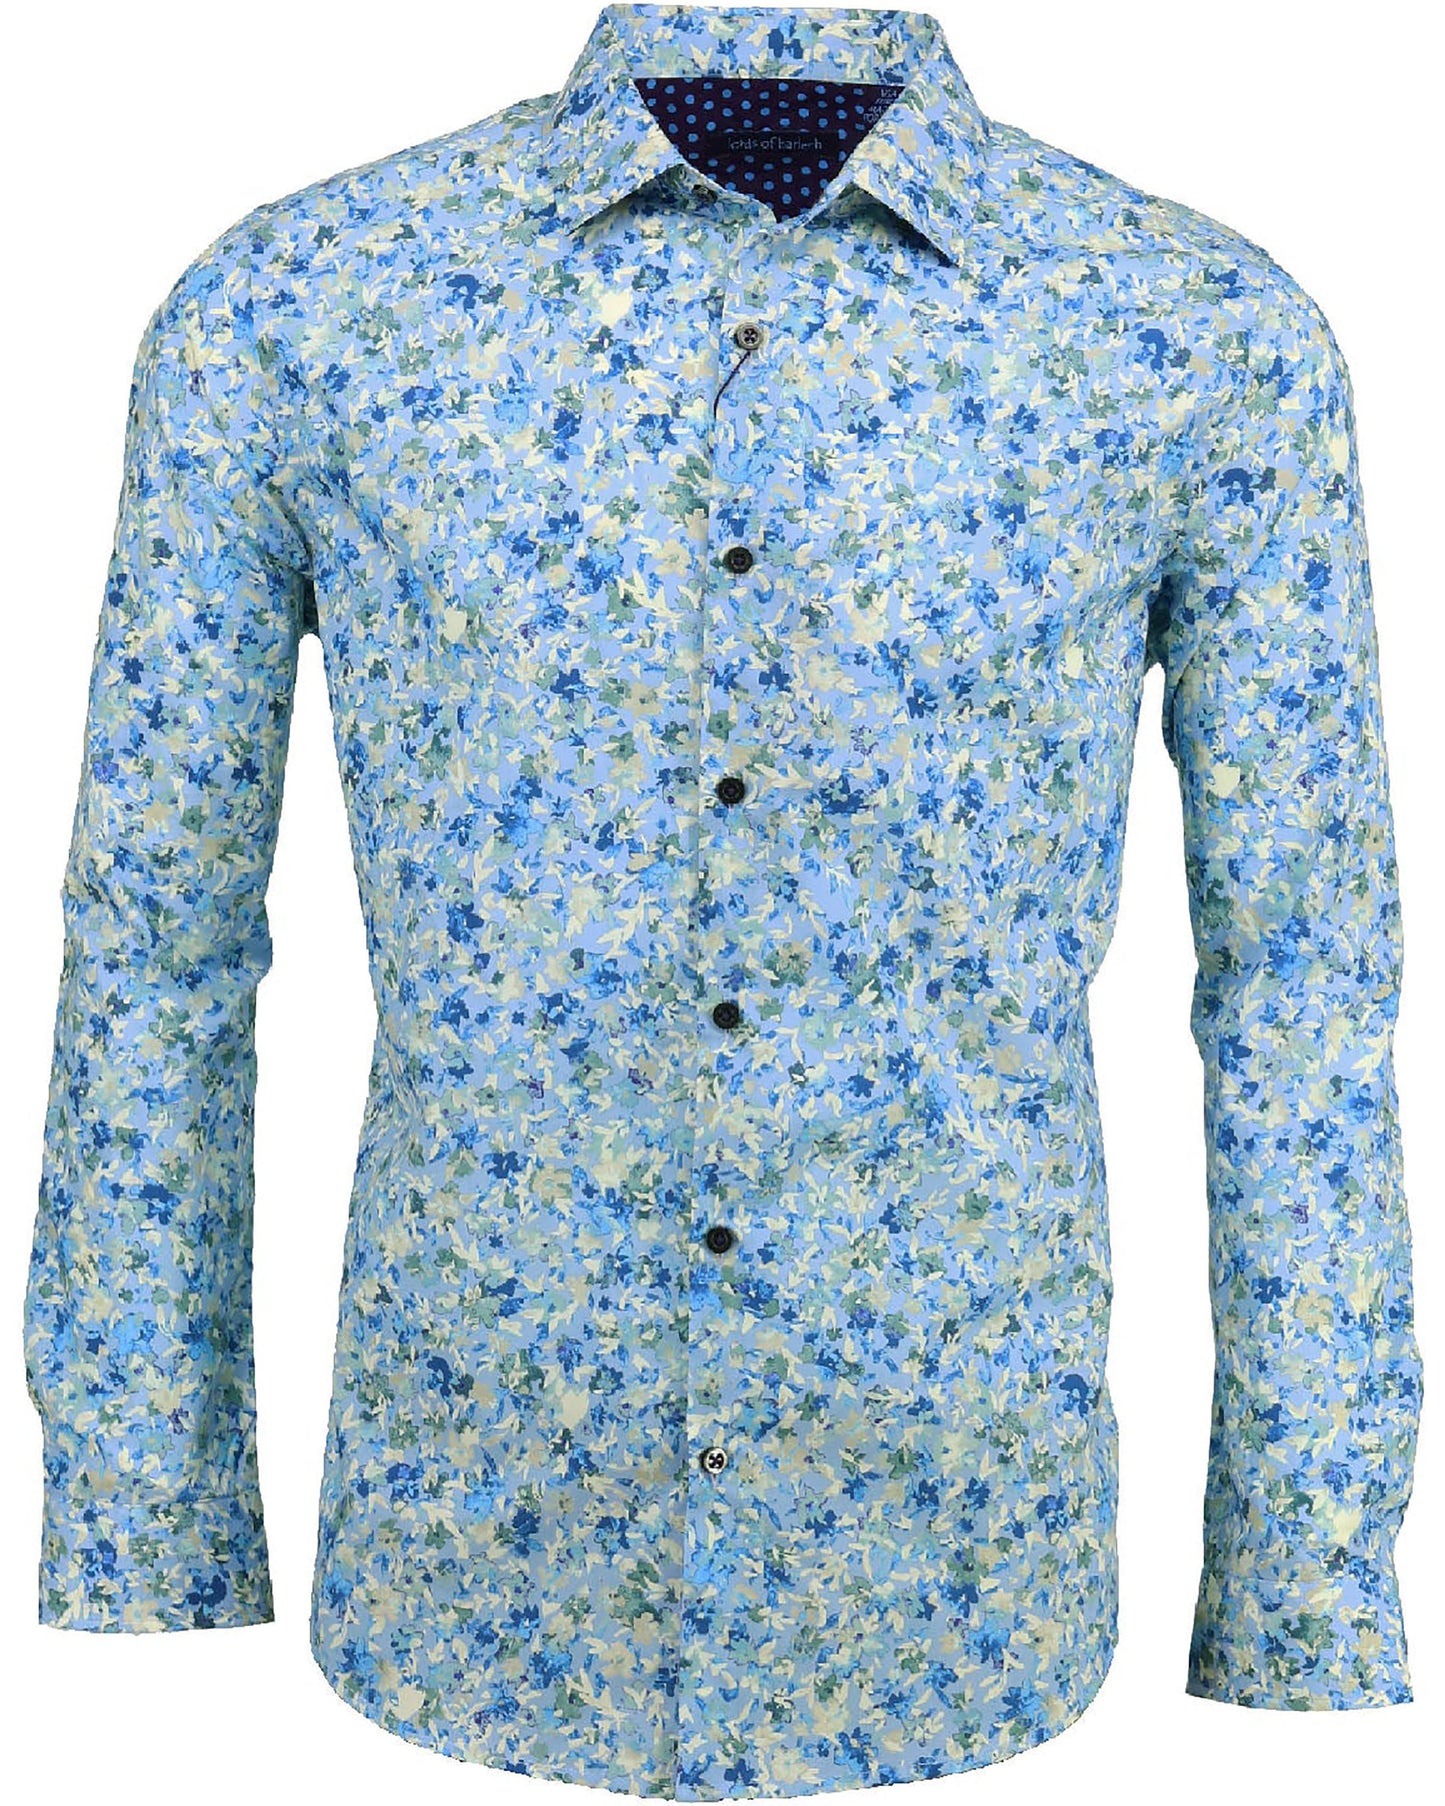 Norman Wispy Floral Sky Shirt